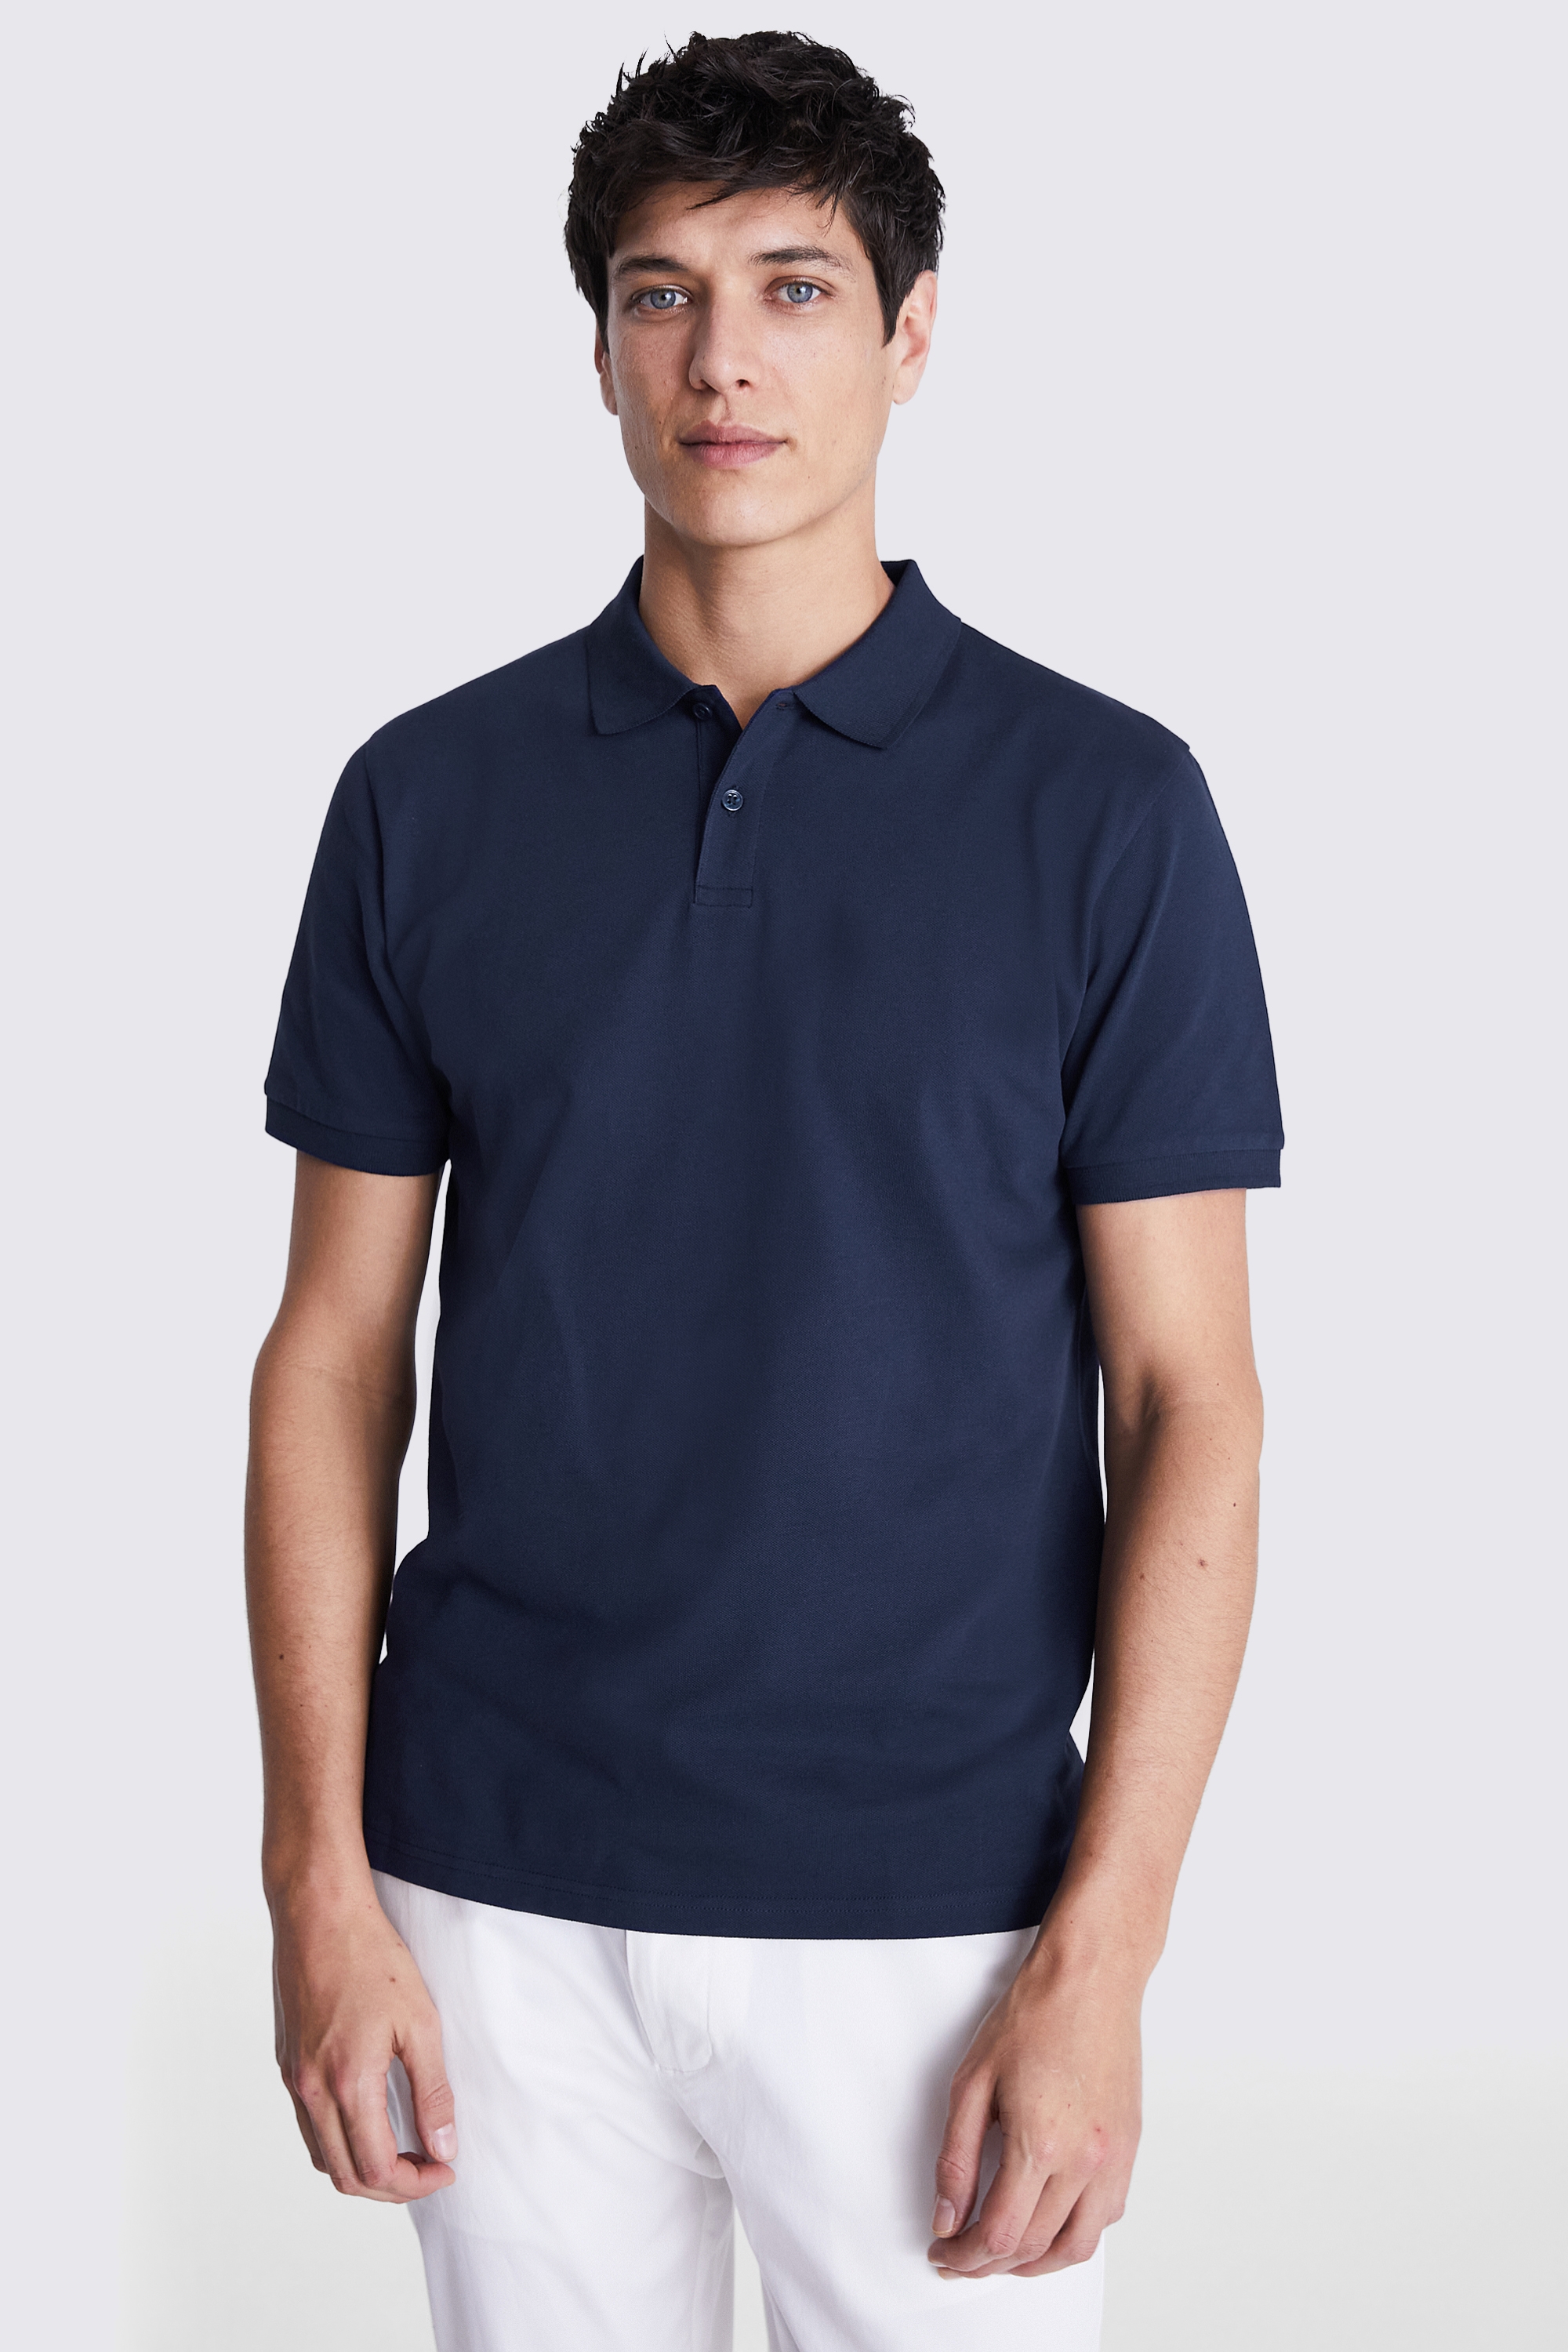 Navy Piqué Polo Shirt | Buy Online at Moss